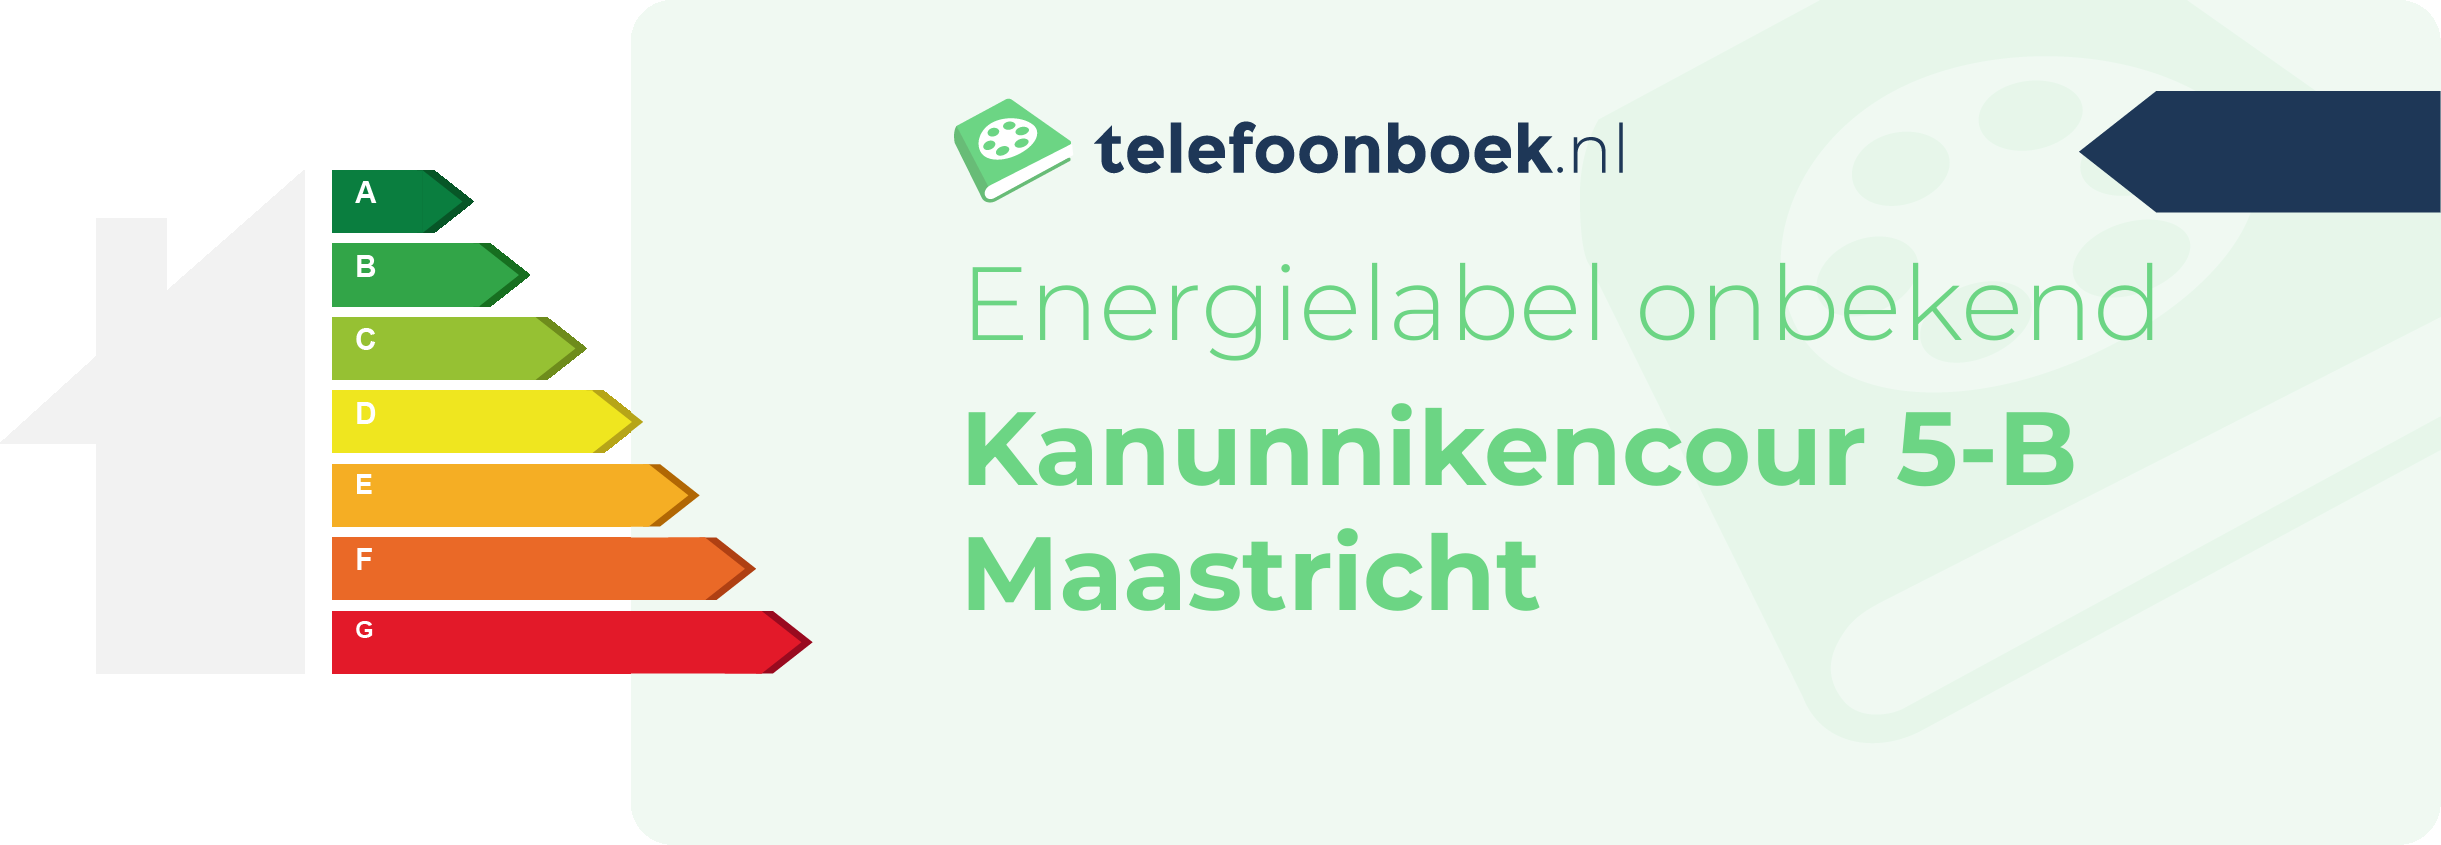 Energielabel Kanunnikencour 5-B Maastricht